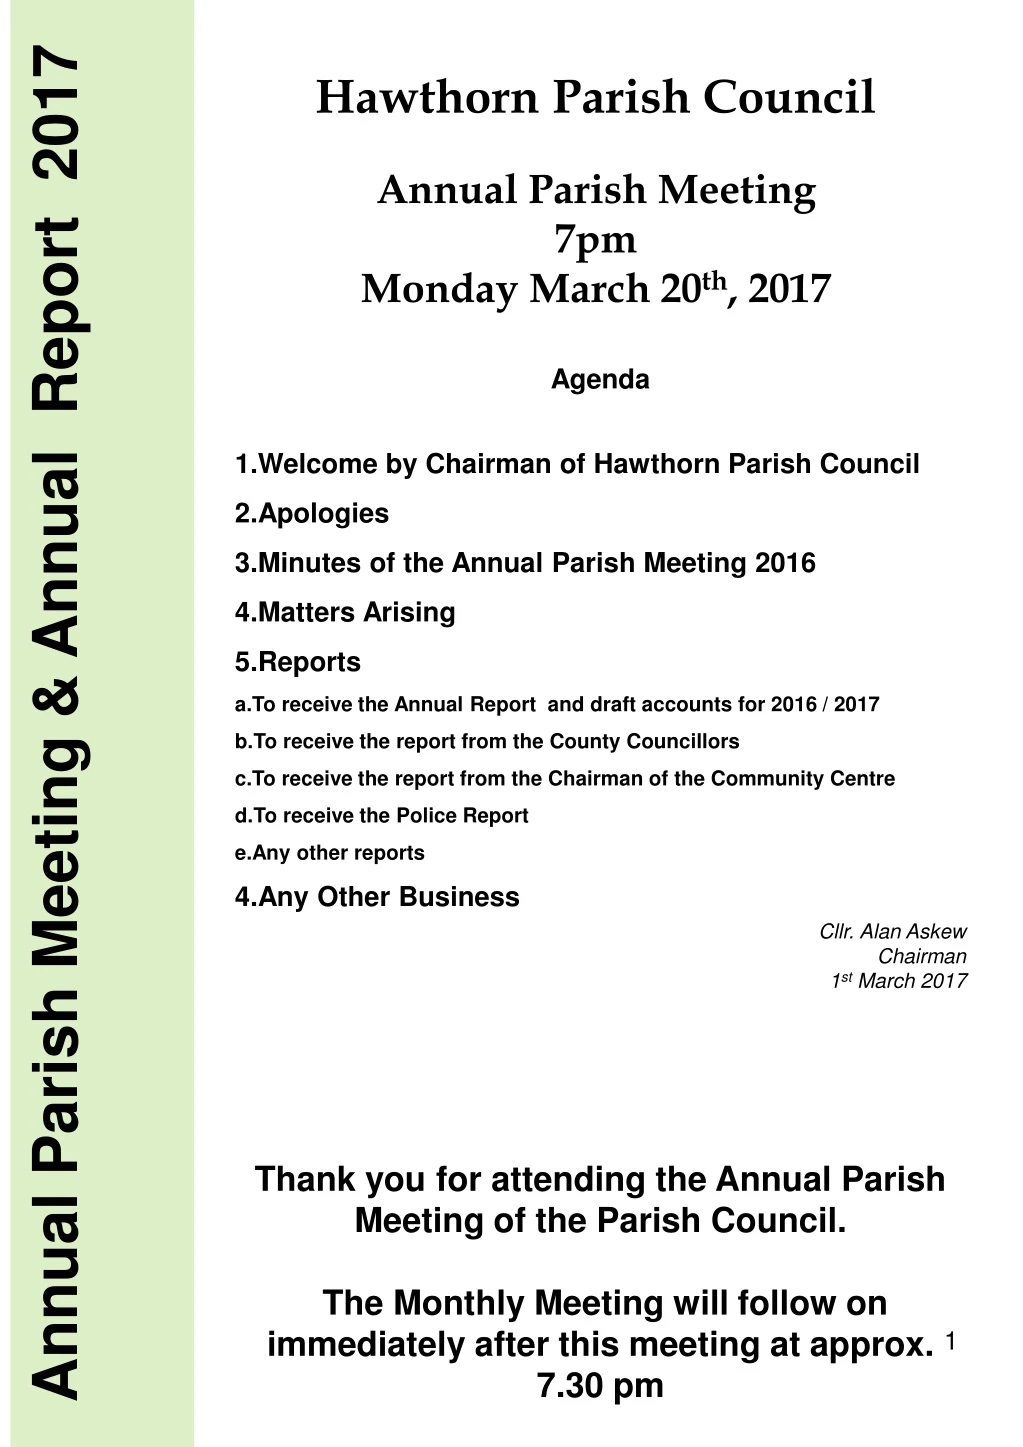 hawthorn parish council annual parish meeting